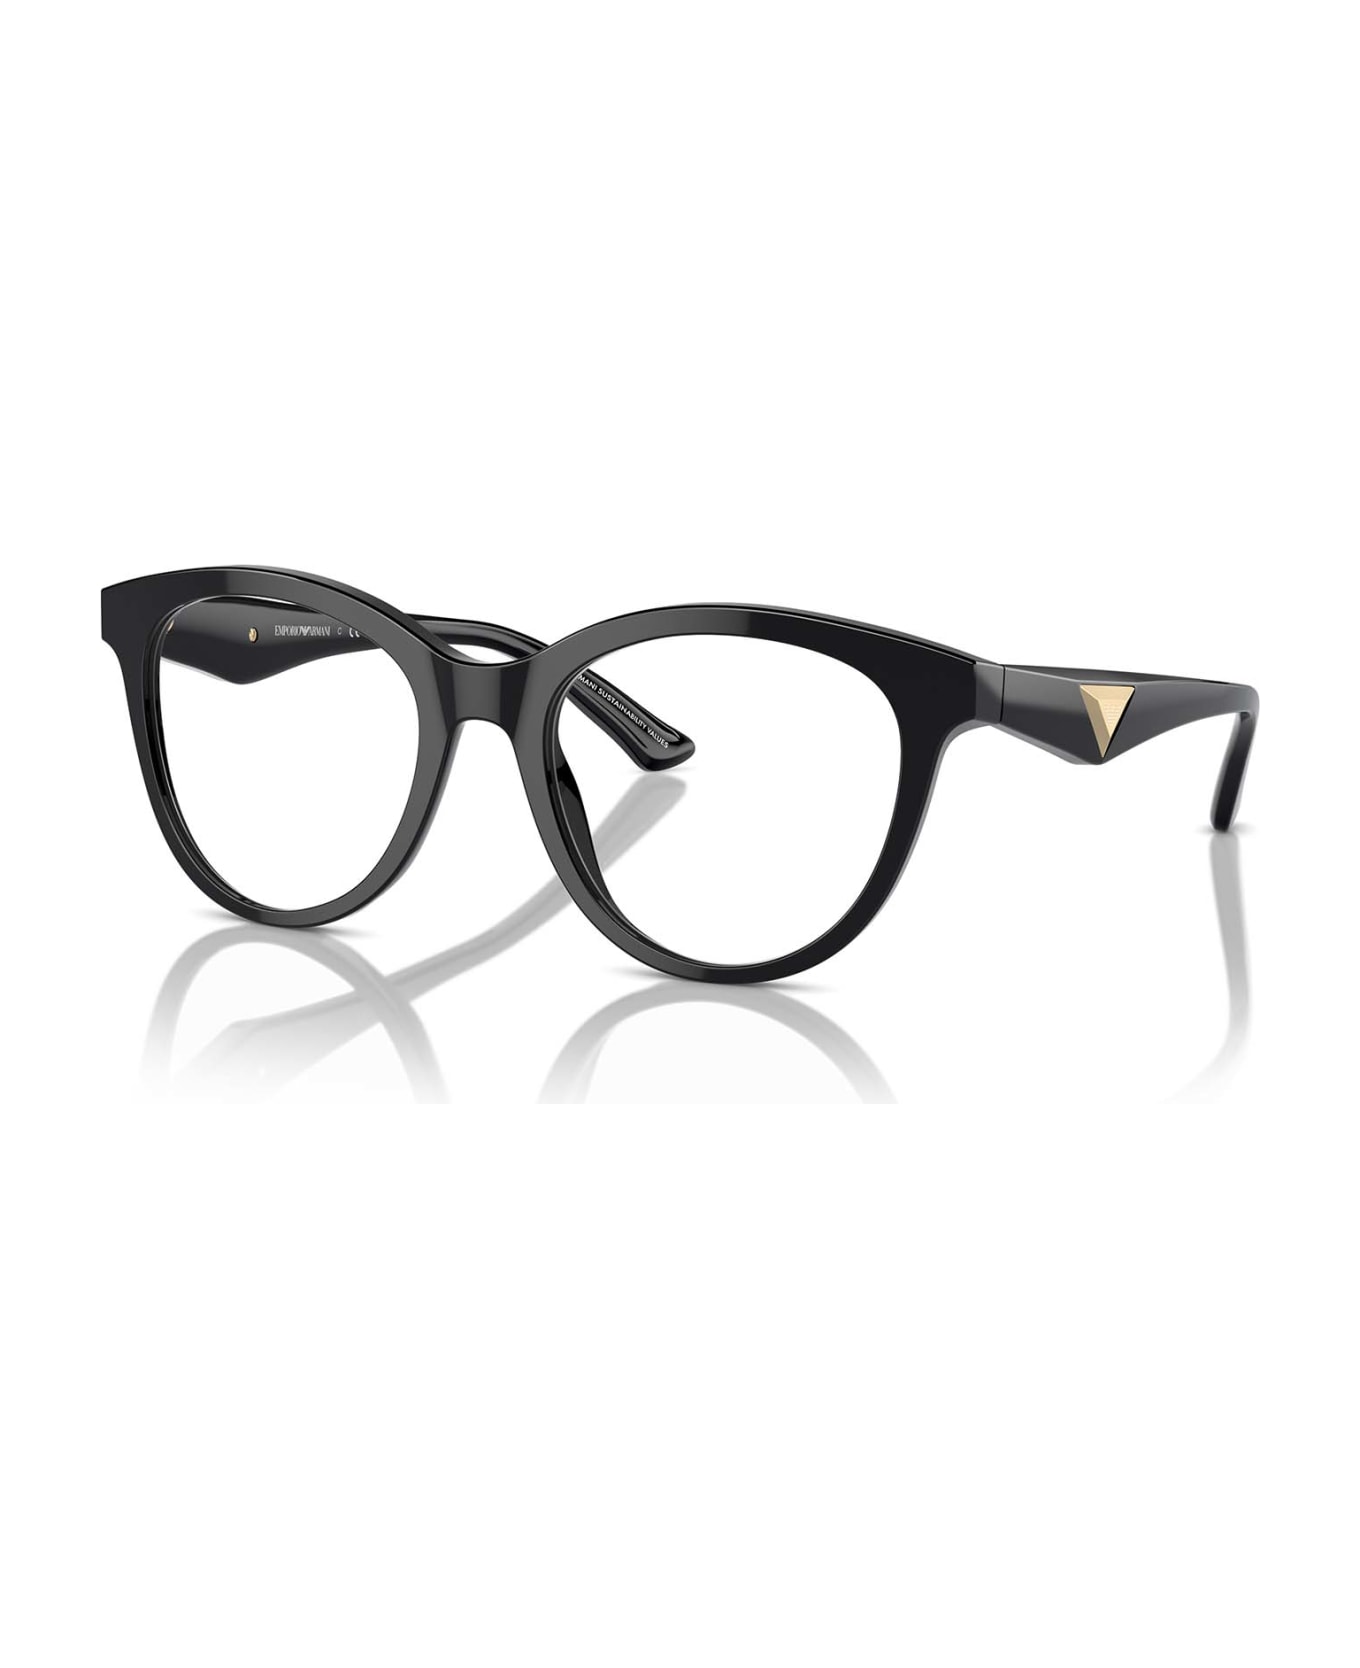 Emporio Armani Ea3236 Shiny Black Glasses - Shiny Black アイウェア